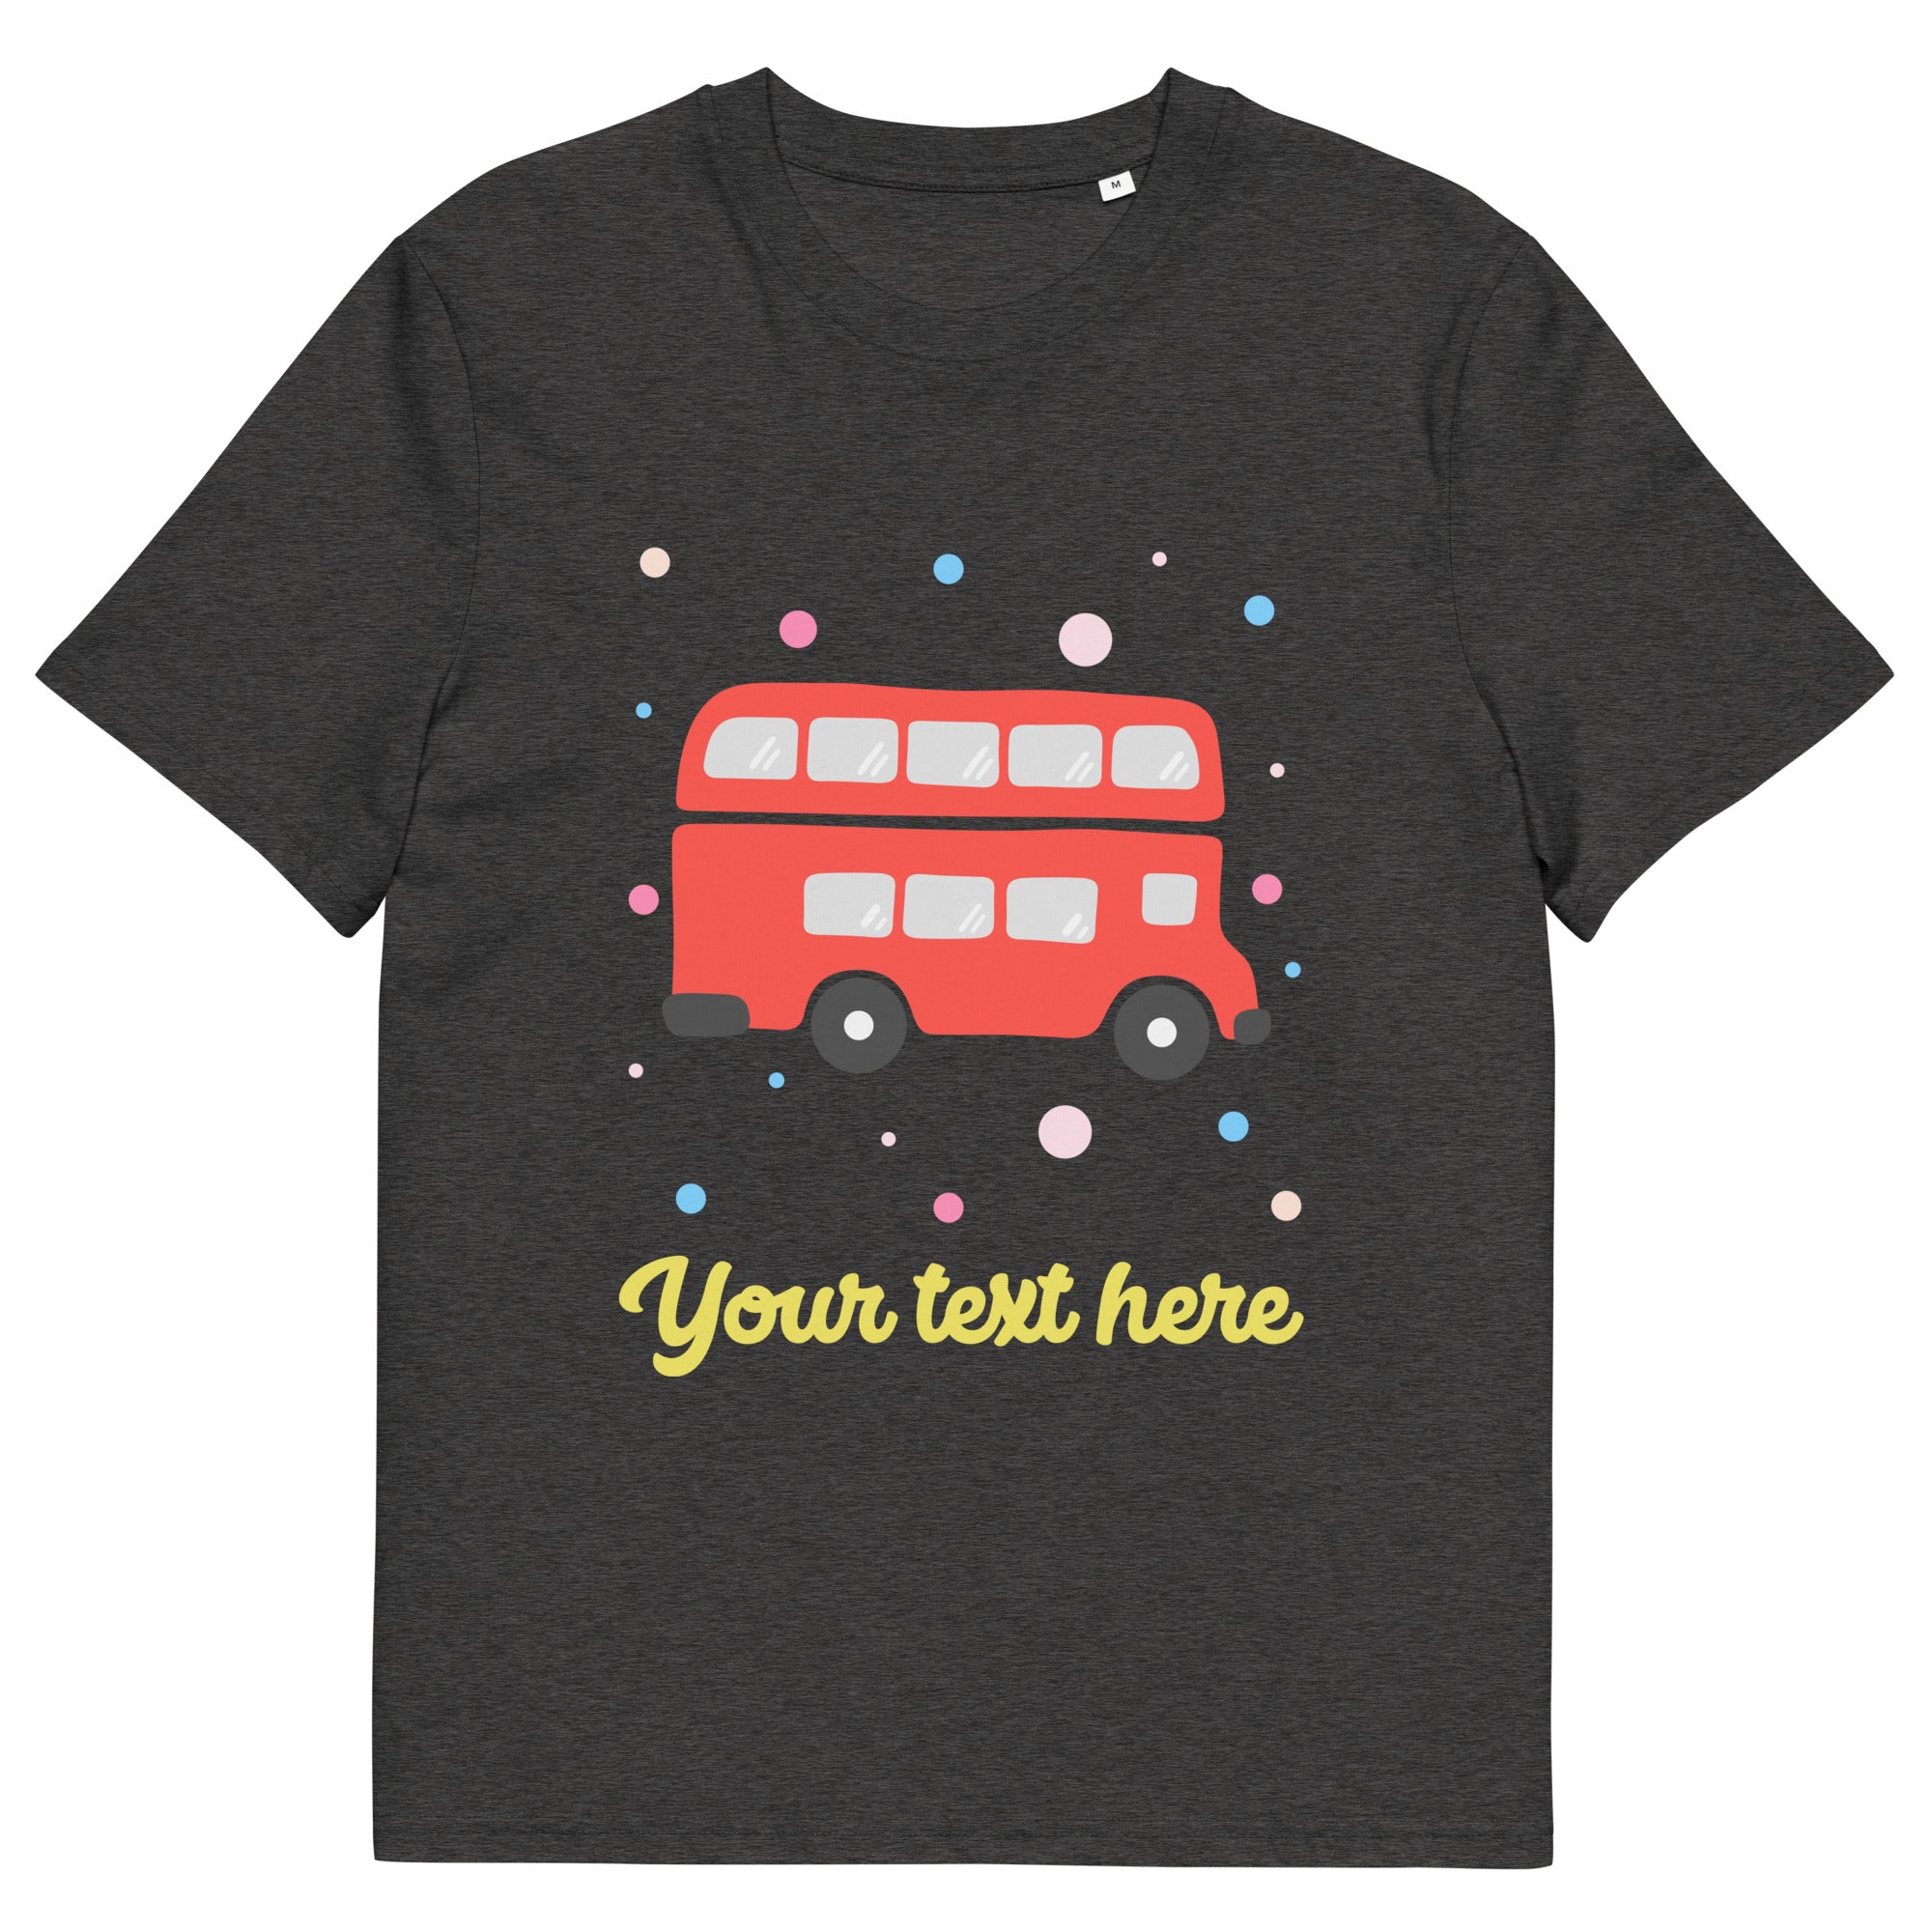 Personalised Custom Text - Organic Cotton Adults Unisex T-Shirt - London Doodles - Red Bus - Dark Grey